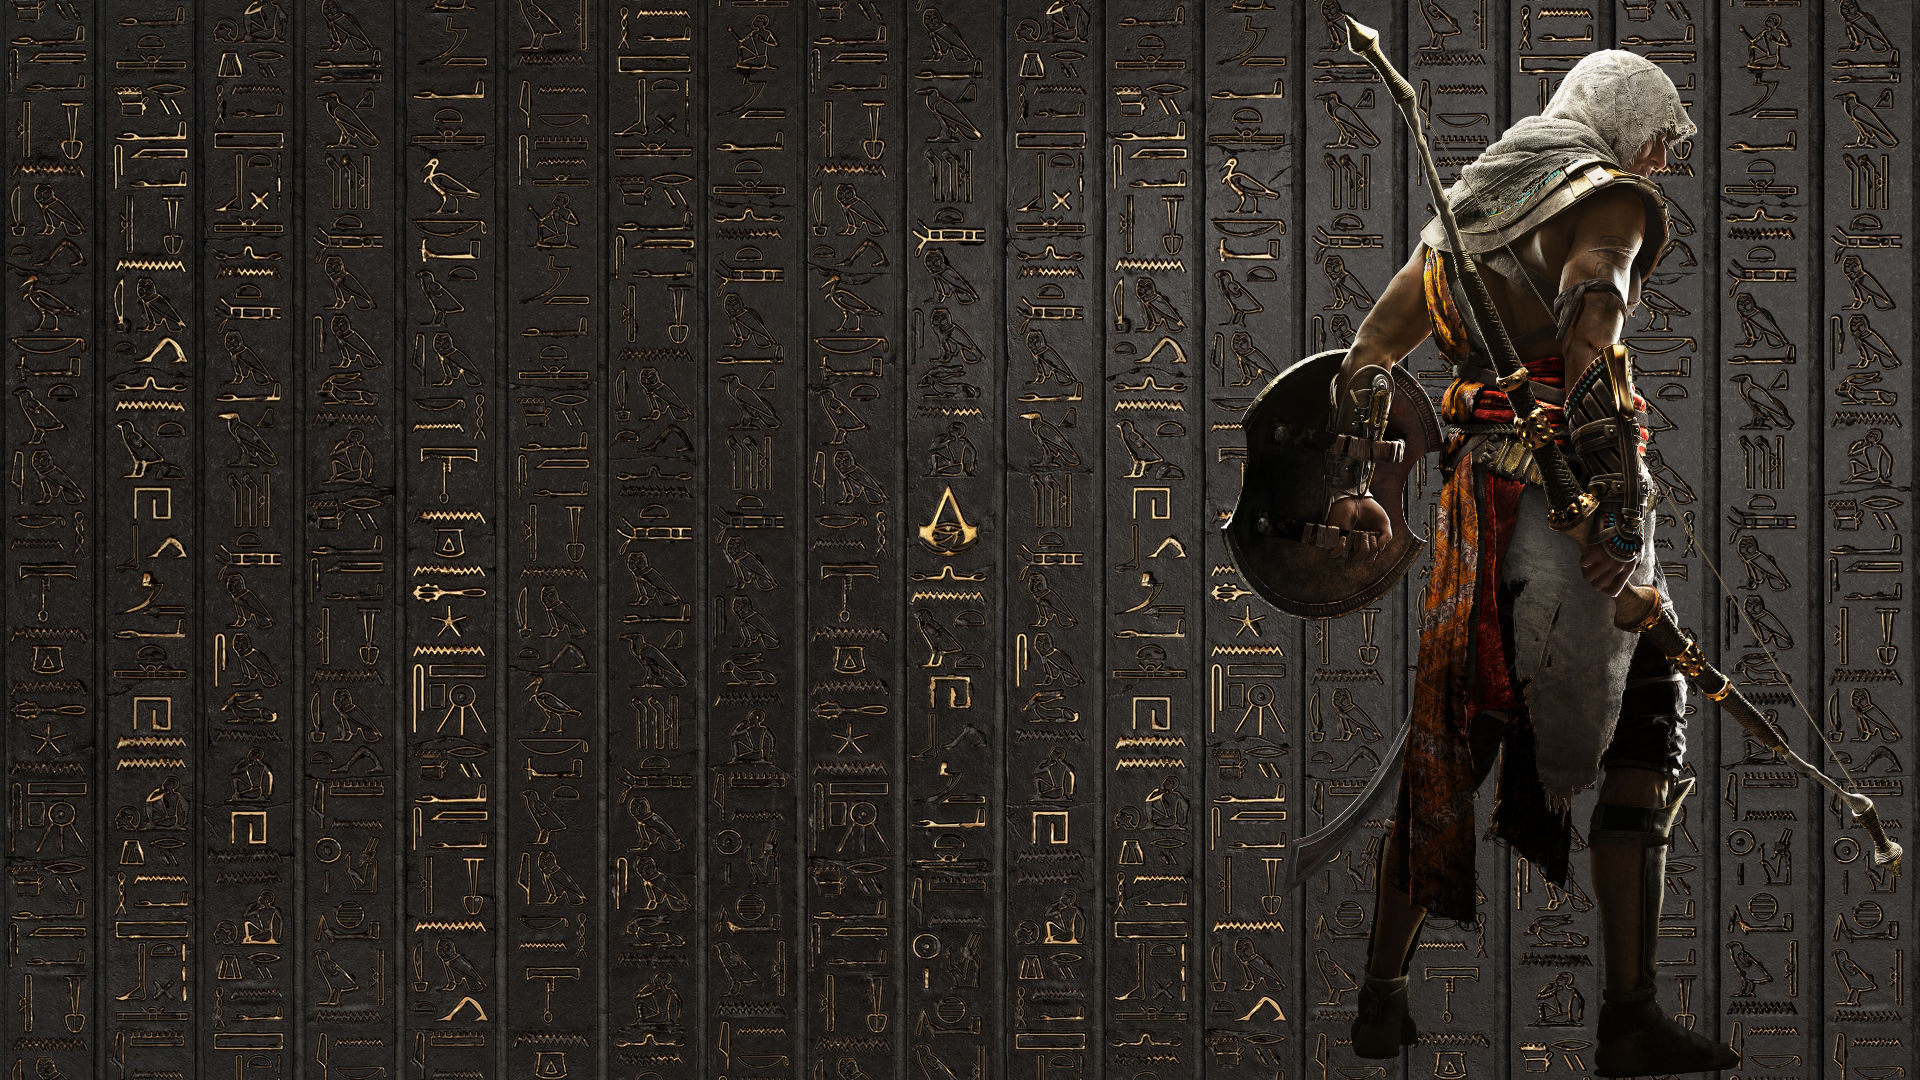 General 1920x1080 hieroglyphs hieroglyphics Assassin's Creed: Origins Assassin's Creed video game characters